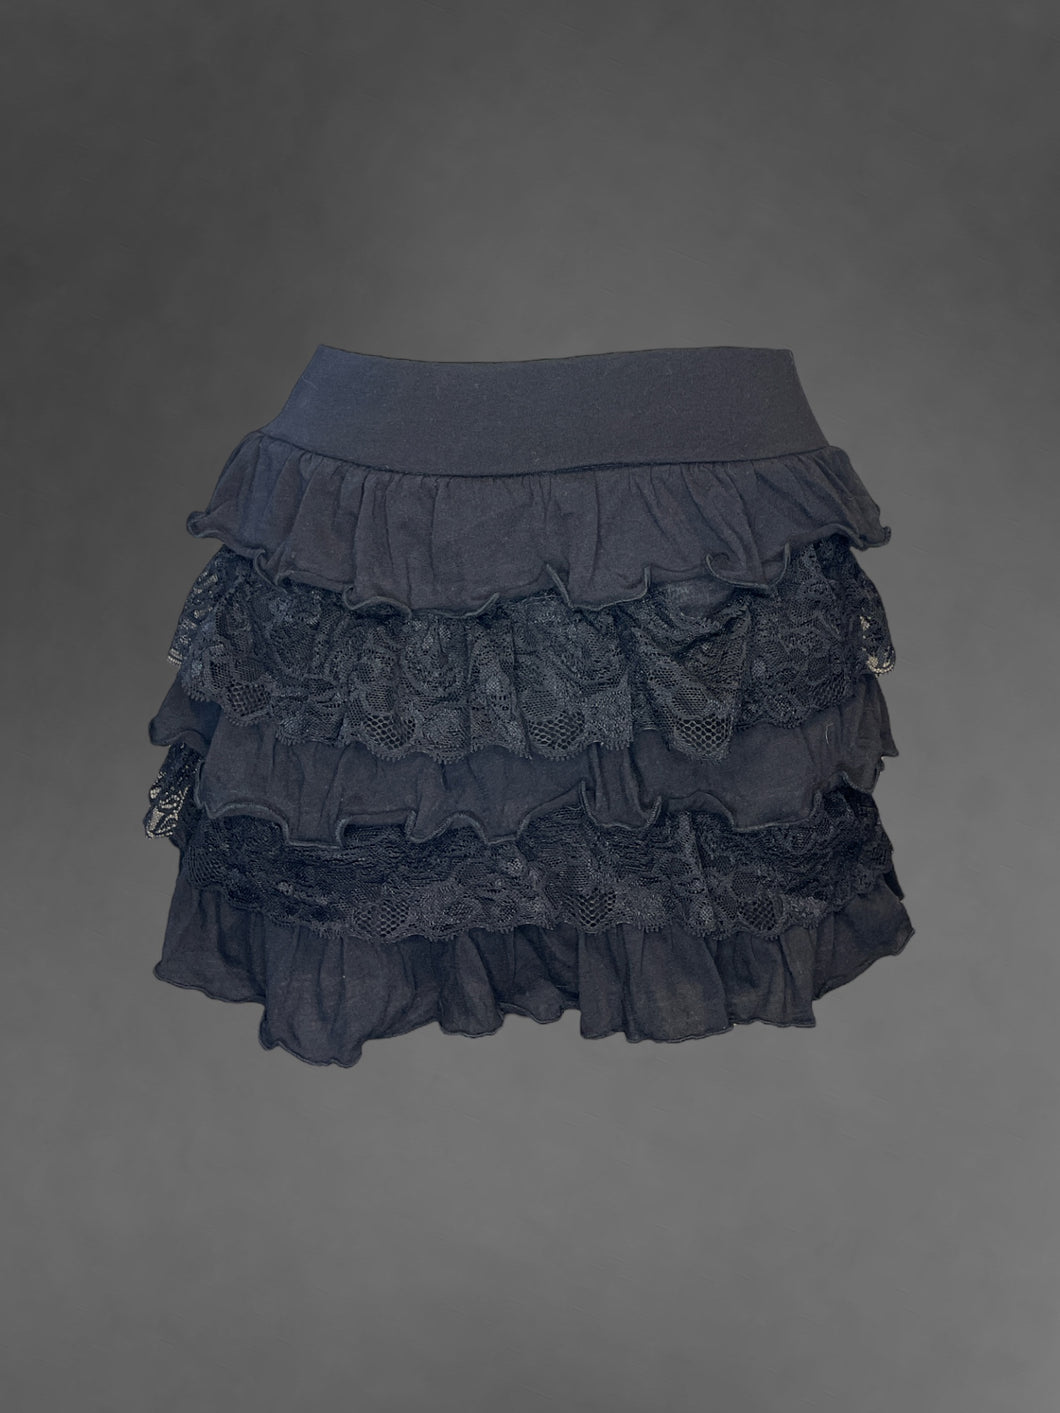 S Black skirt w/ layered lace ruffles, & elastic waist